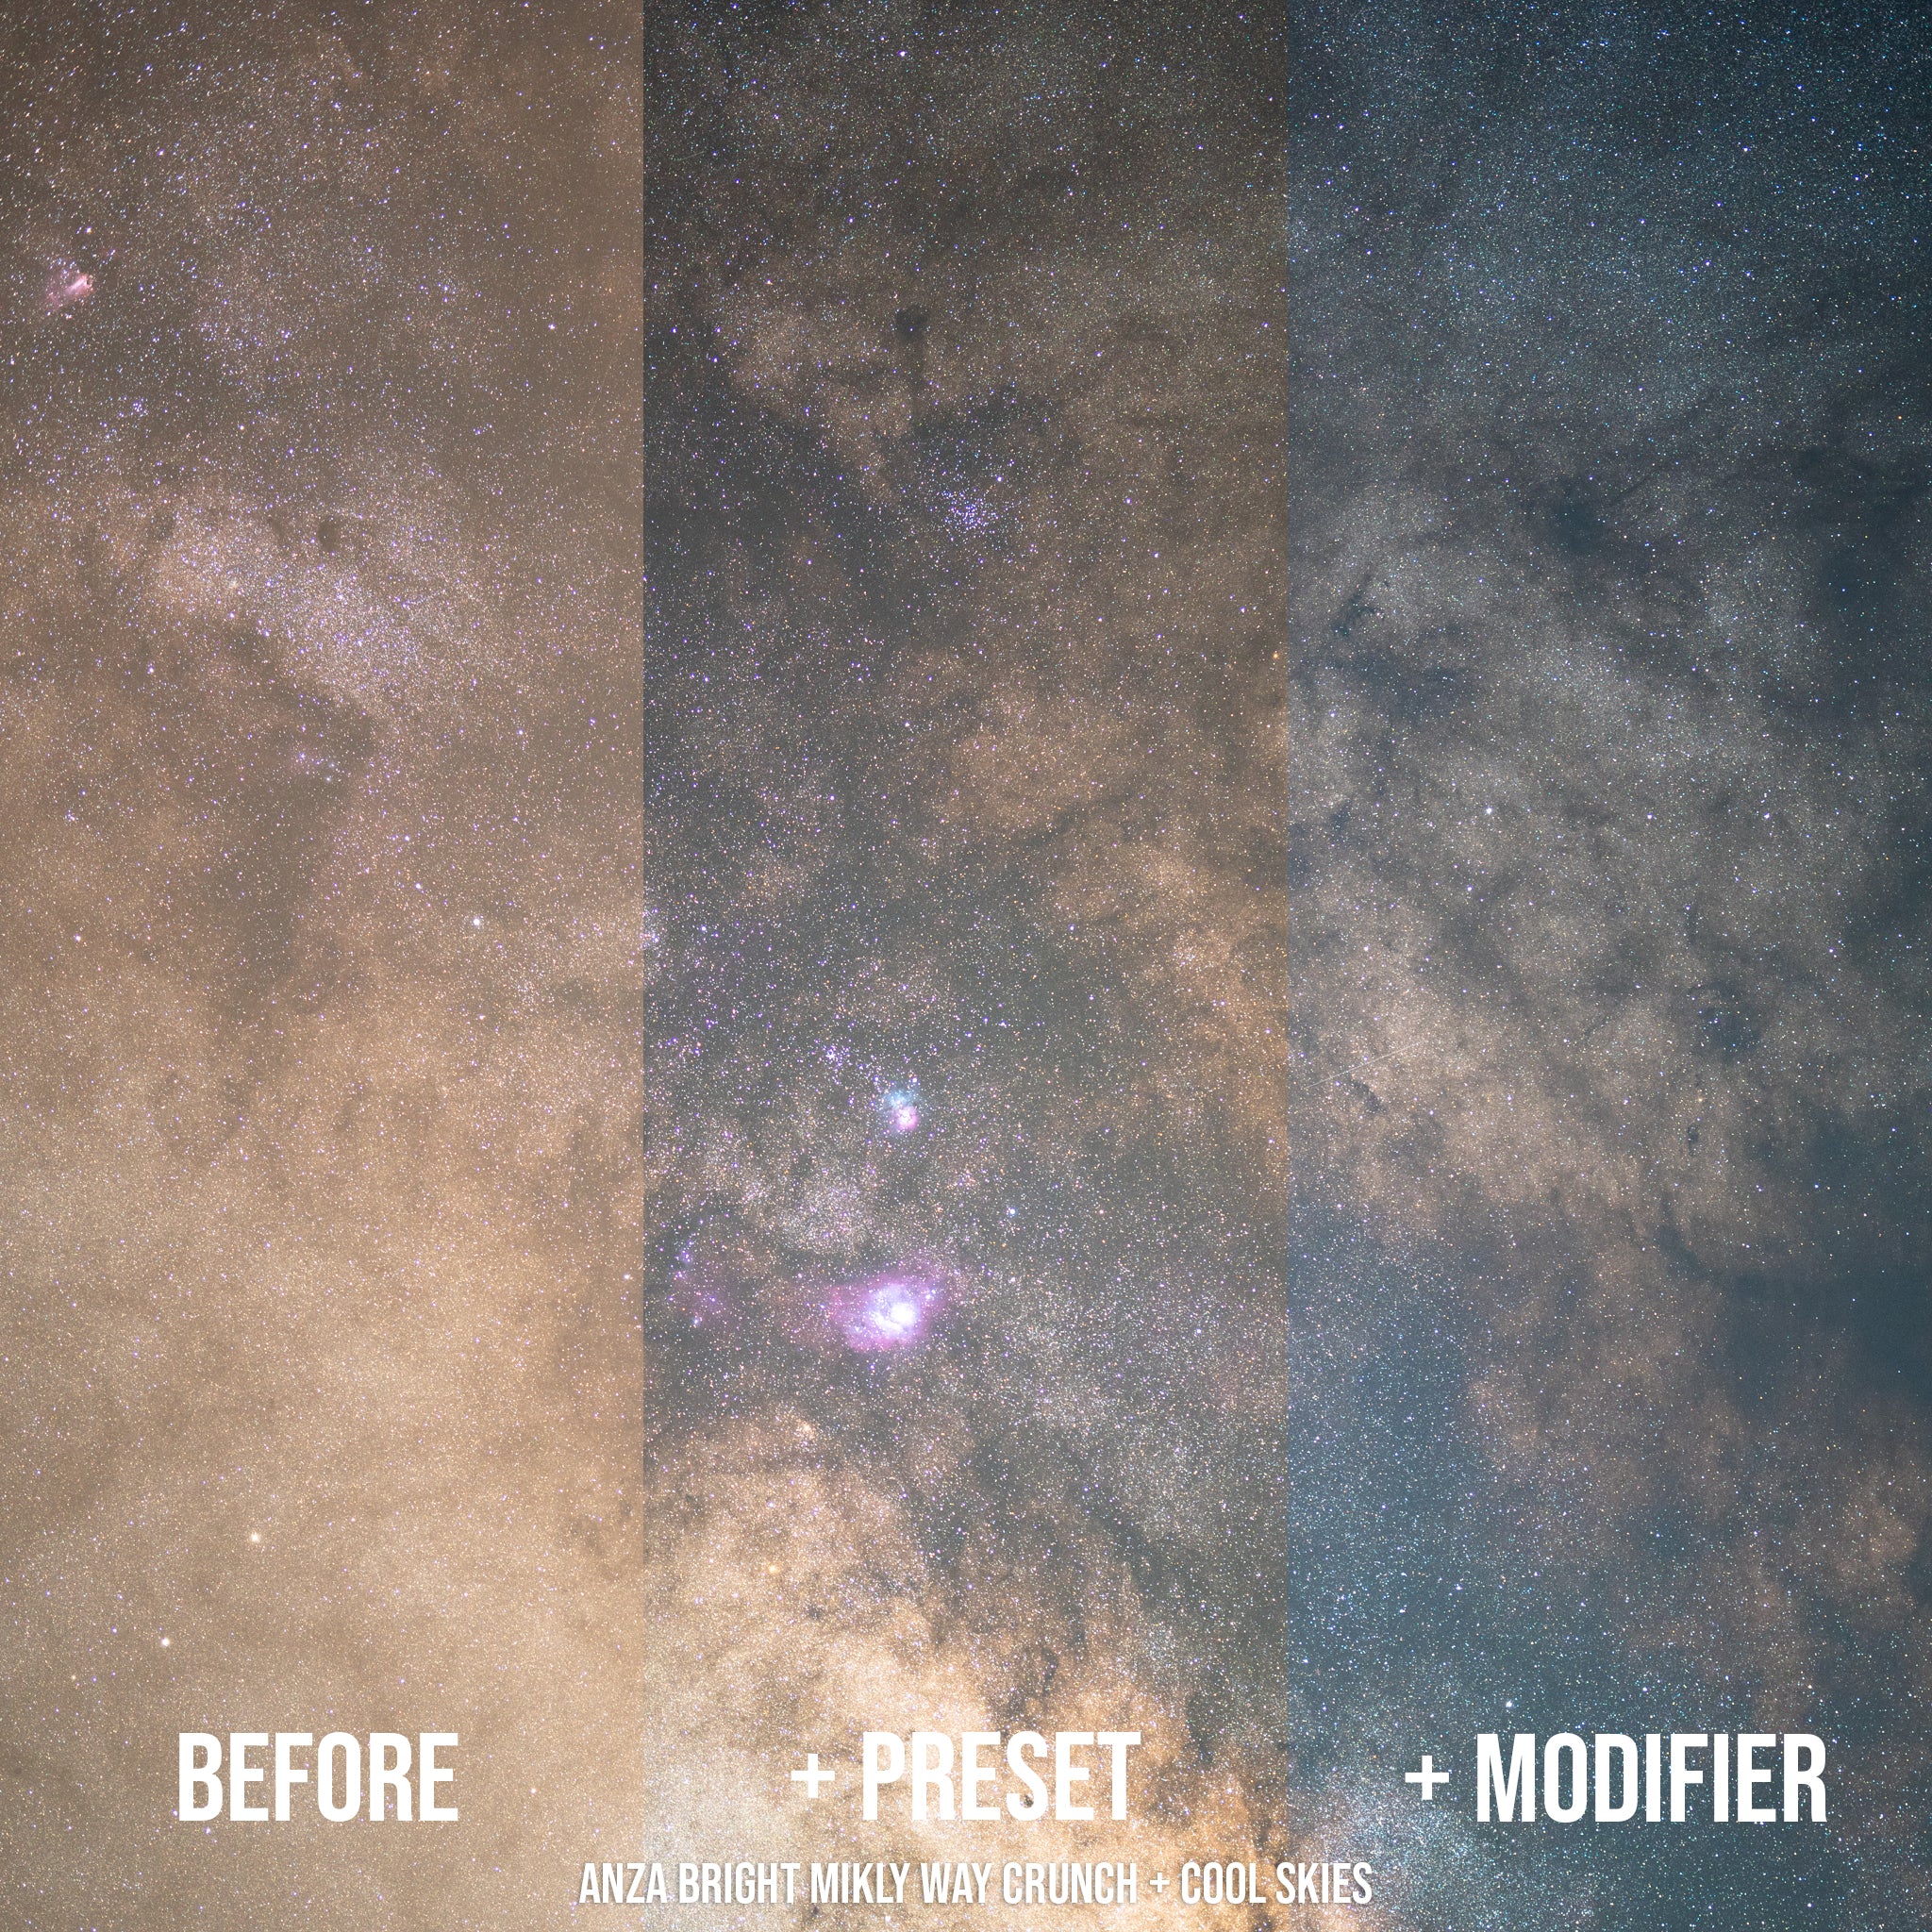 Astrophotography Presets for Lightroom BUNDLE - Starlight & Galactic Preset Collections + Exclusive Brushes + Comet Preset Bonus